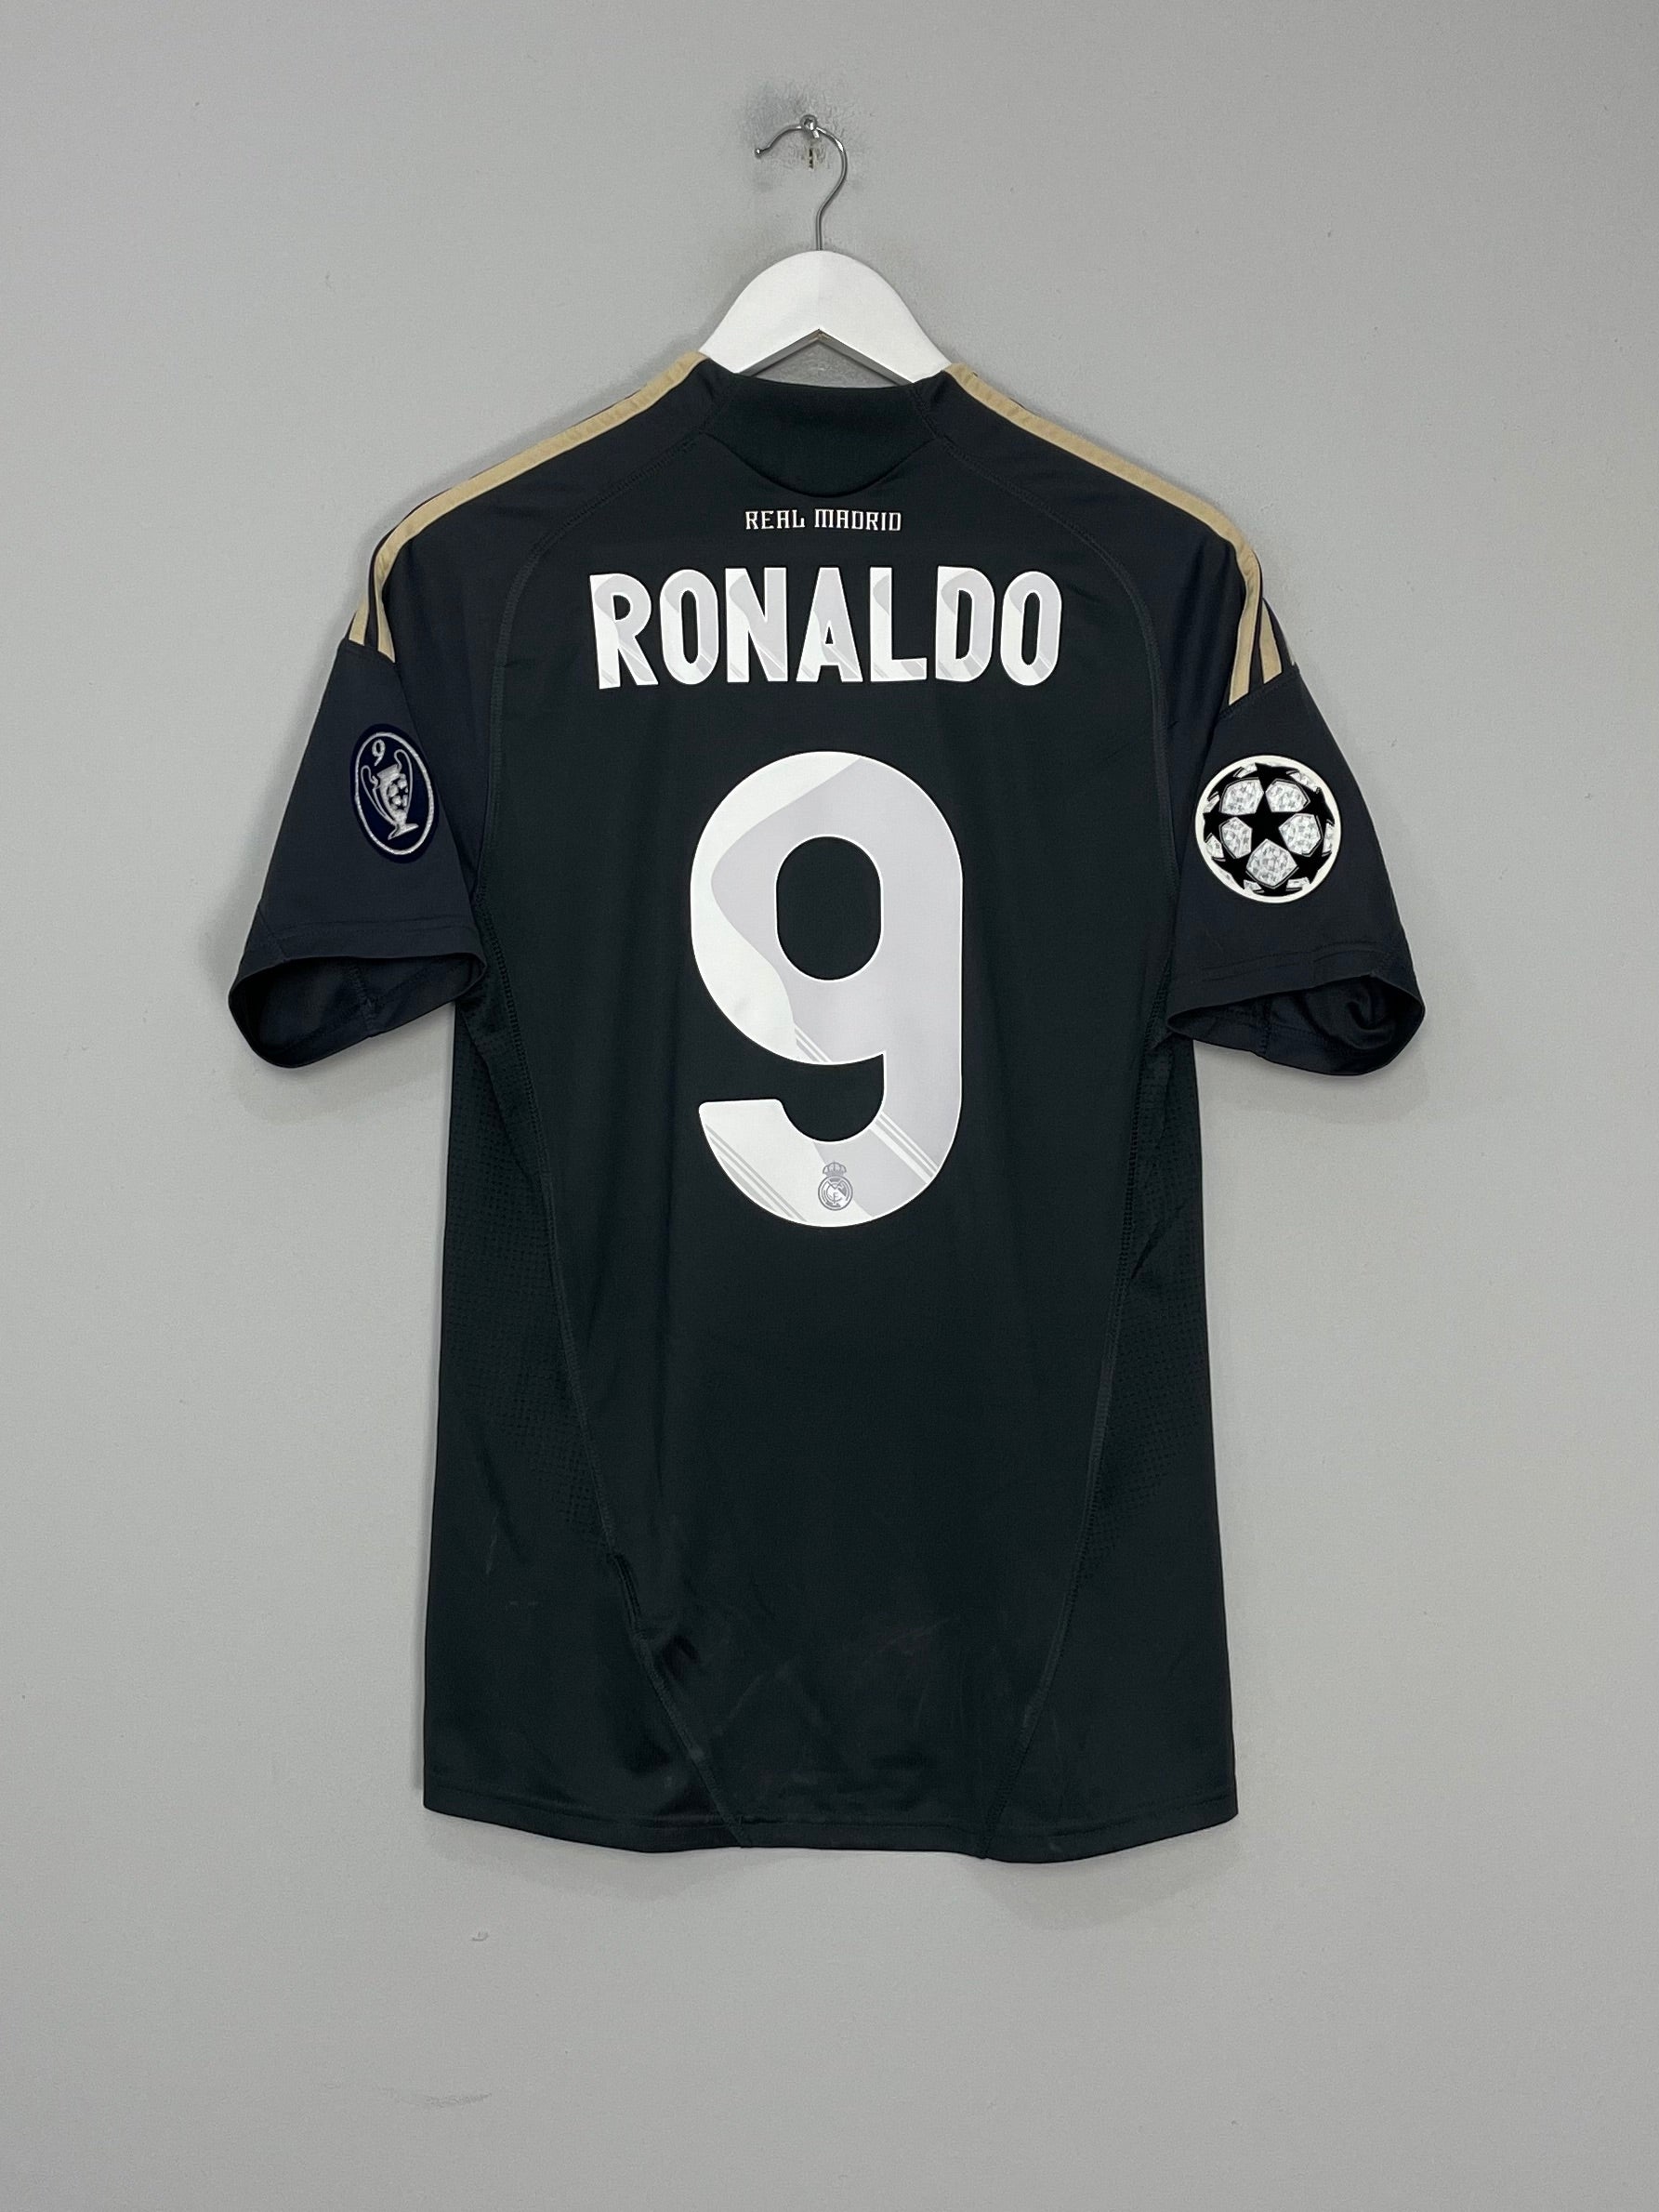 ronaldo 9 real madrid jersey